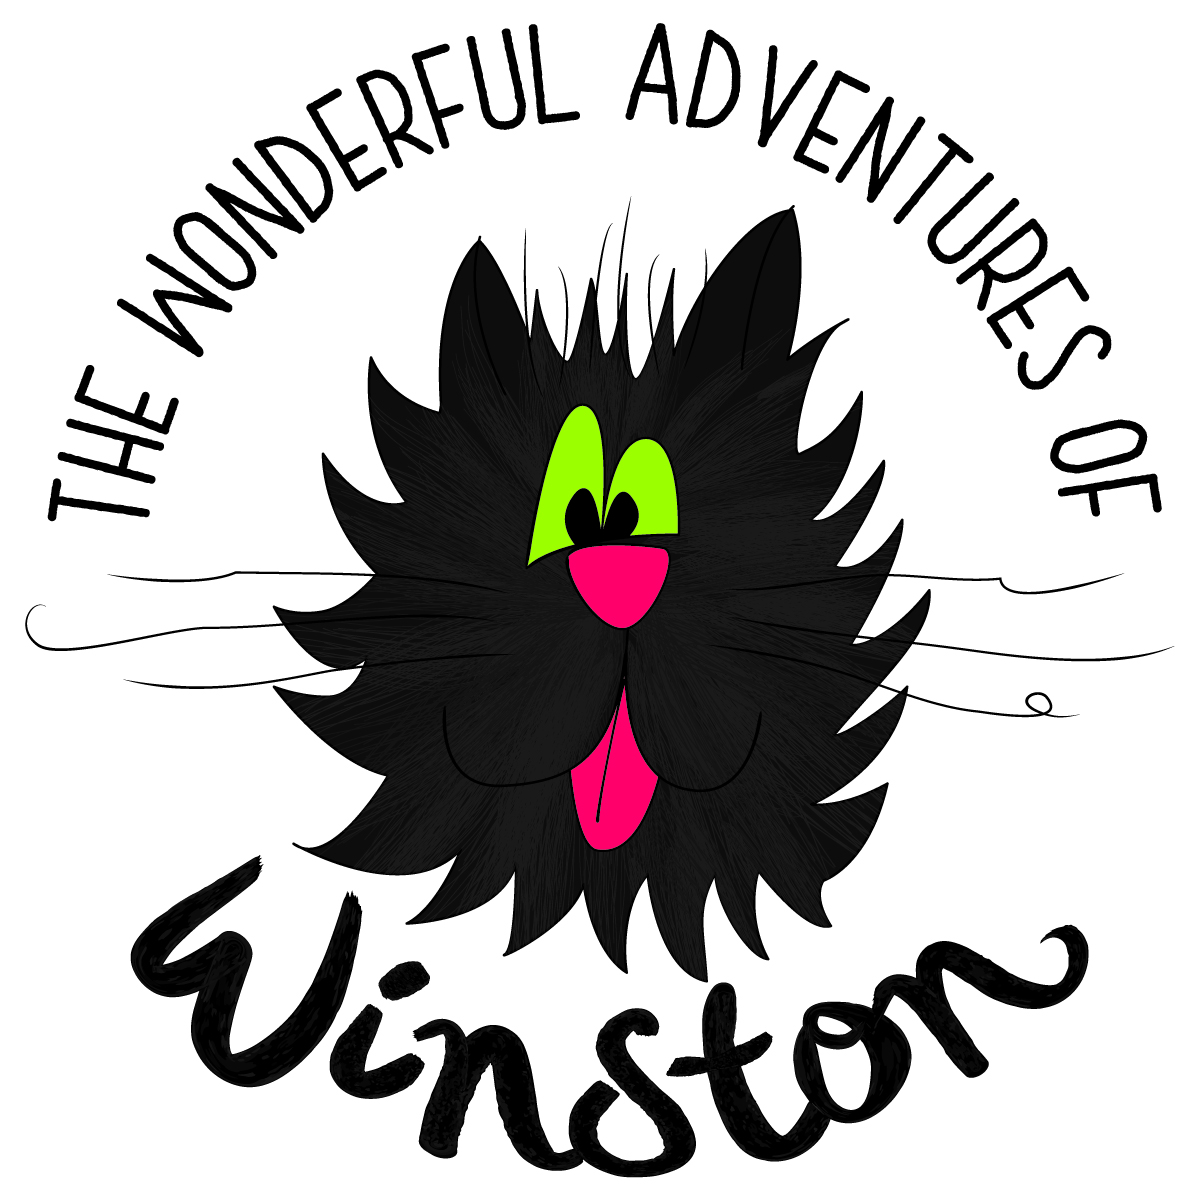 The Wonderful Adventures of Winston